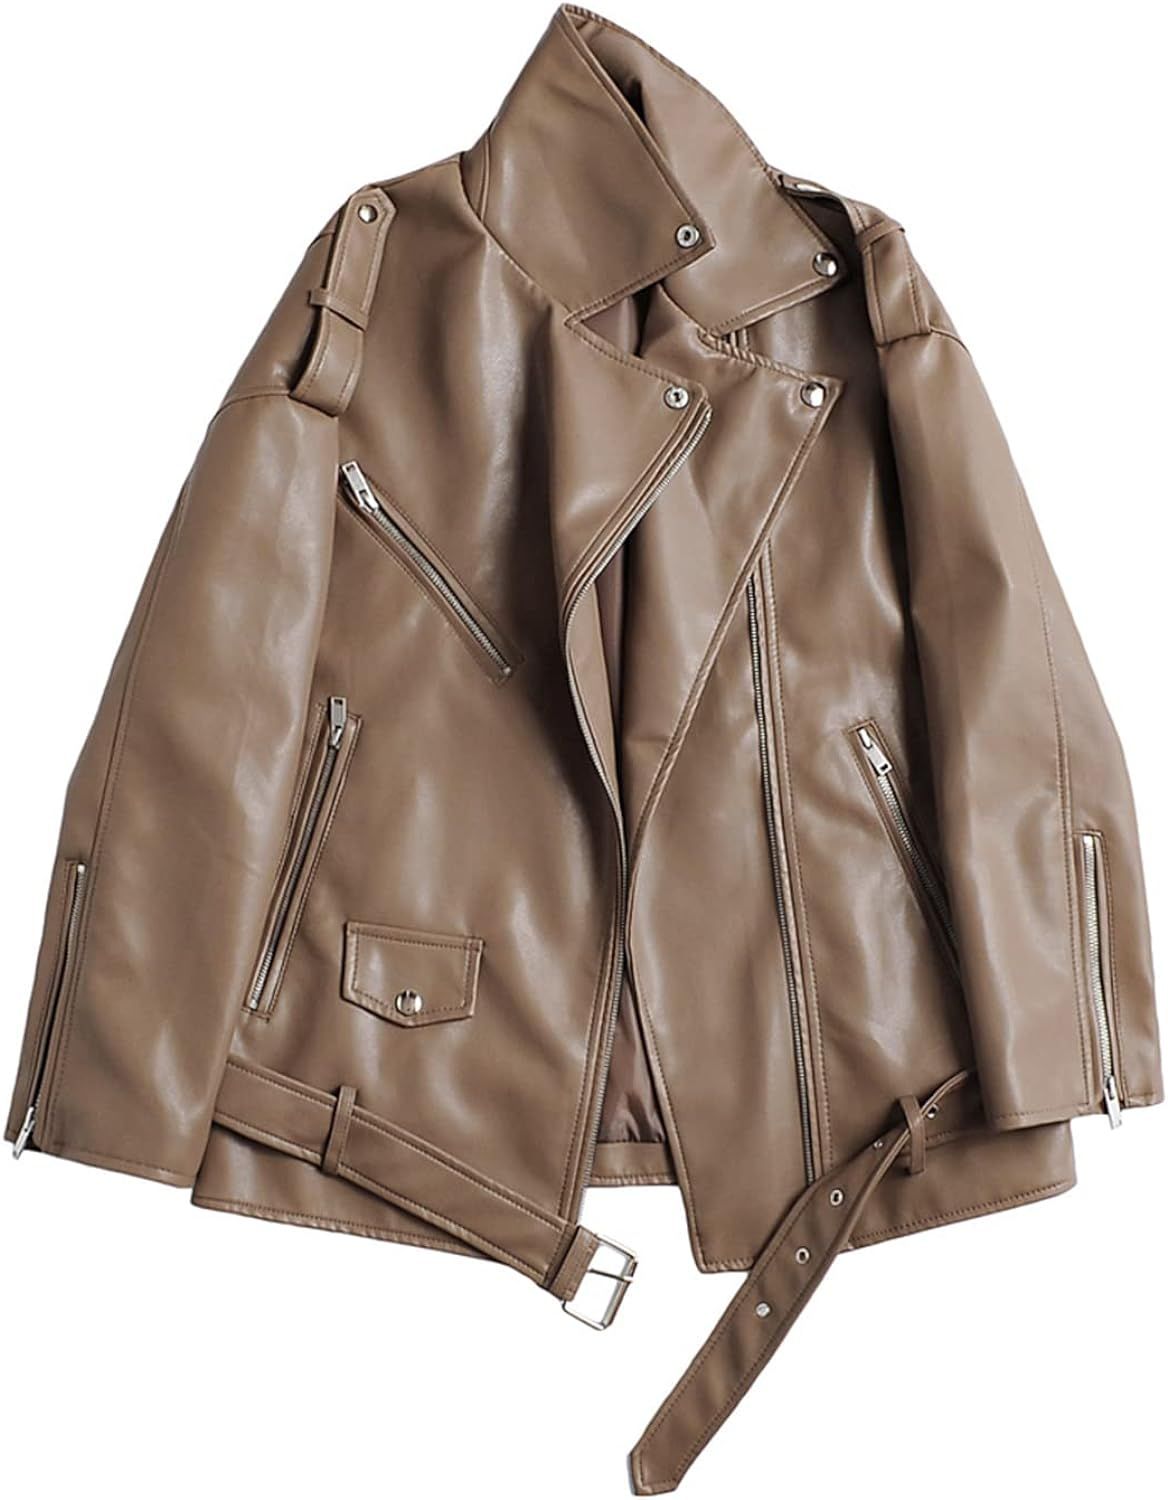 LY VAREY LIN Women Faux Leather Jacket Lapel Collar Motorcycle Zip